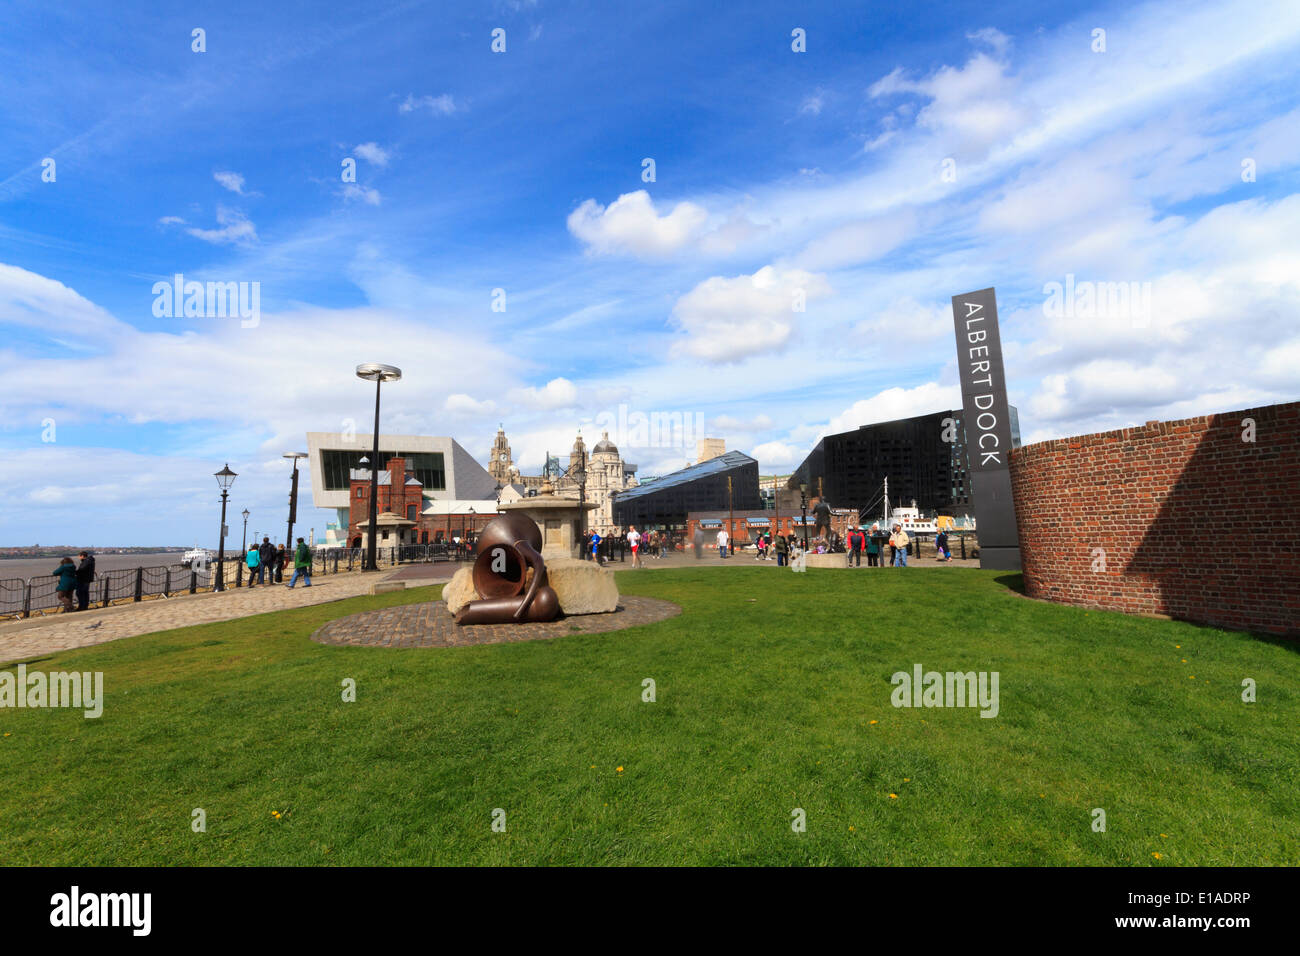 Albert Dock, Liverpool lungomare storico, Liverpool, in Inghilterra. Foto Stock